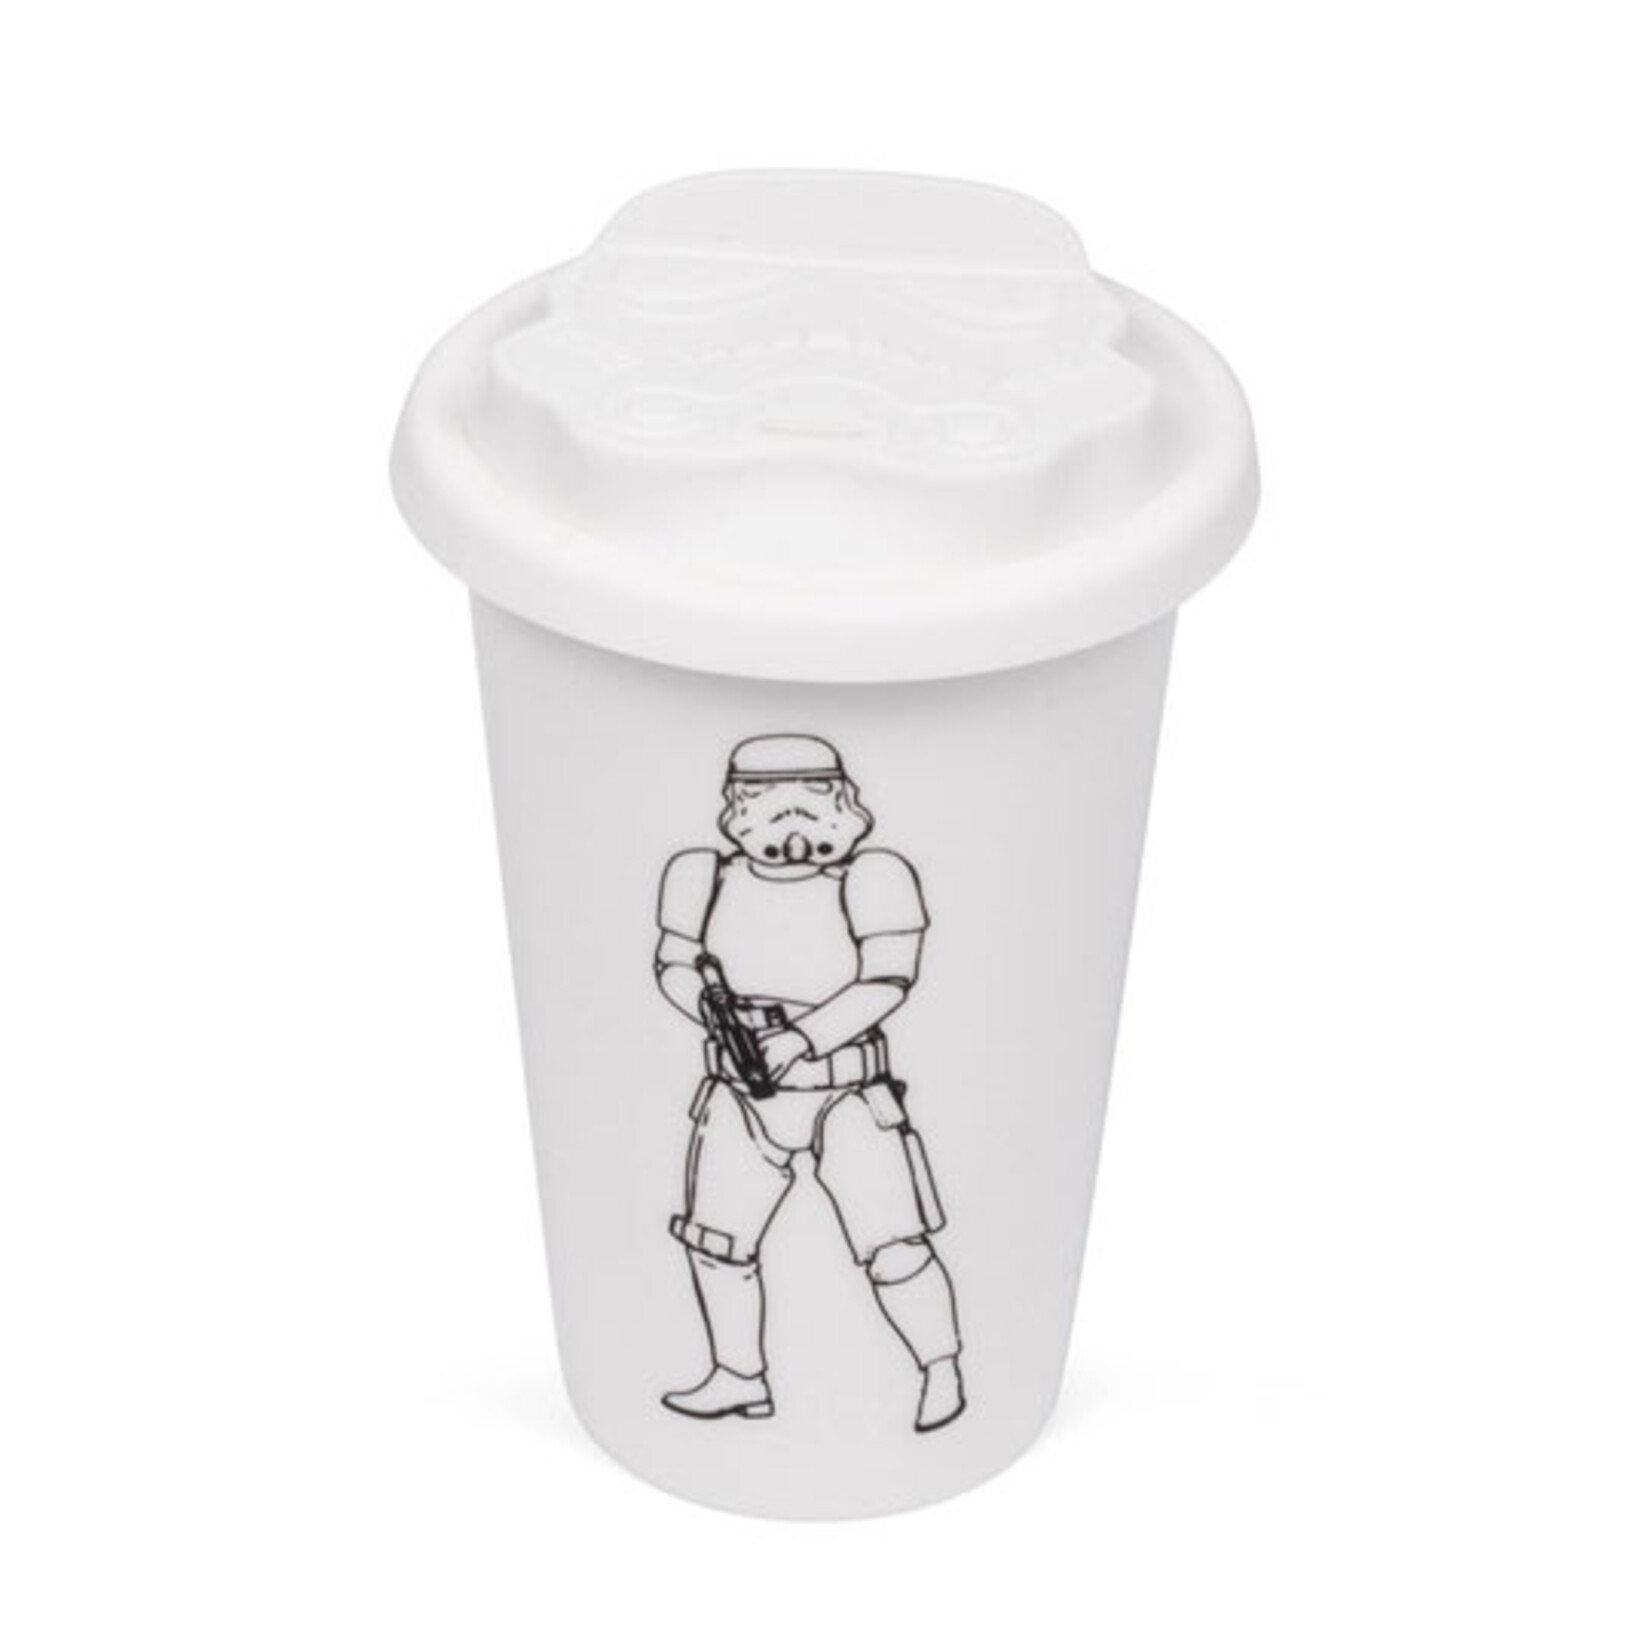 Thumbs Up! Thumbs Up! Star Wars Original Stormtrooper Travel Mug White 275 ml